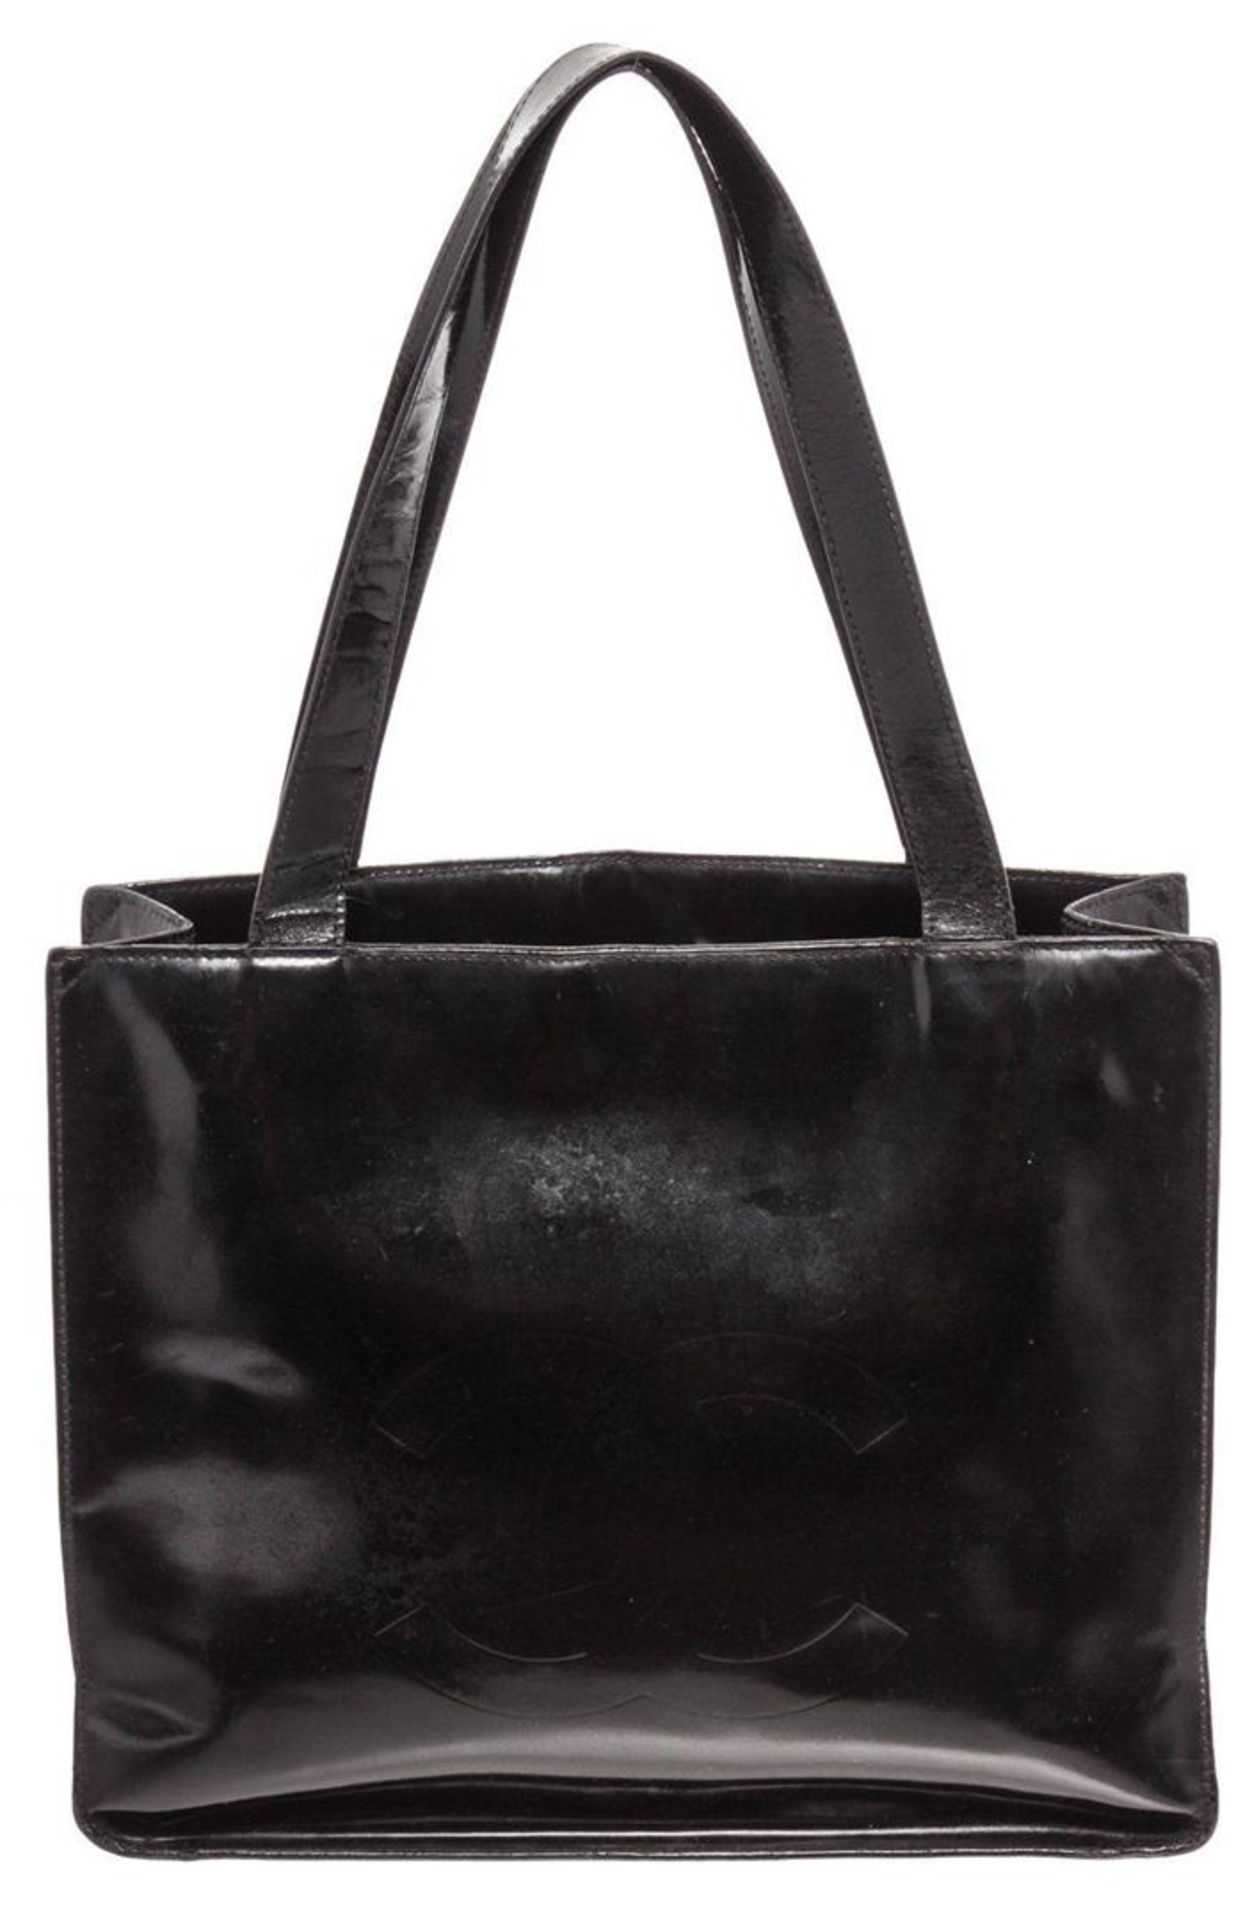 Chanel Black Patent Leather Vintage CC Tote Bag